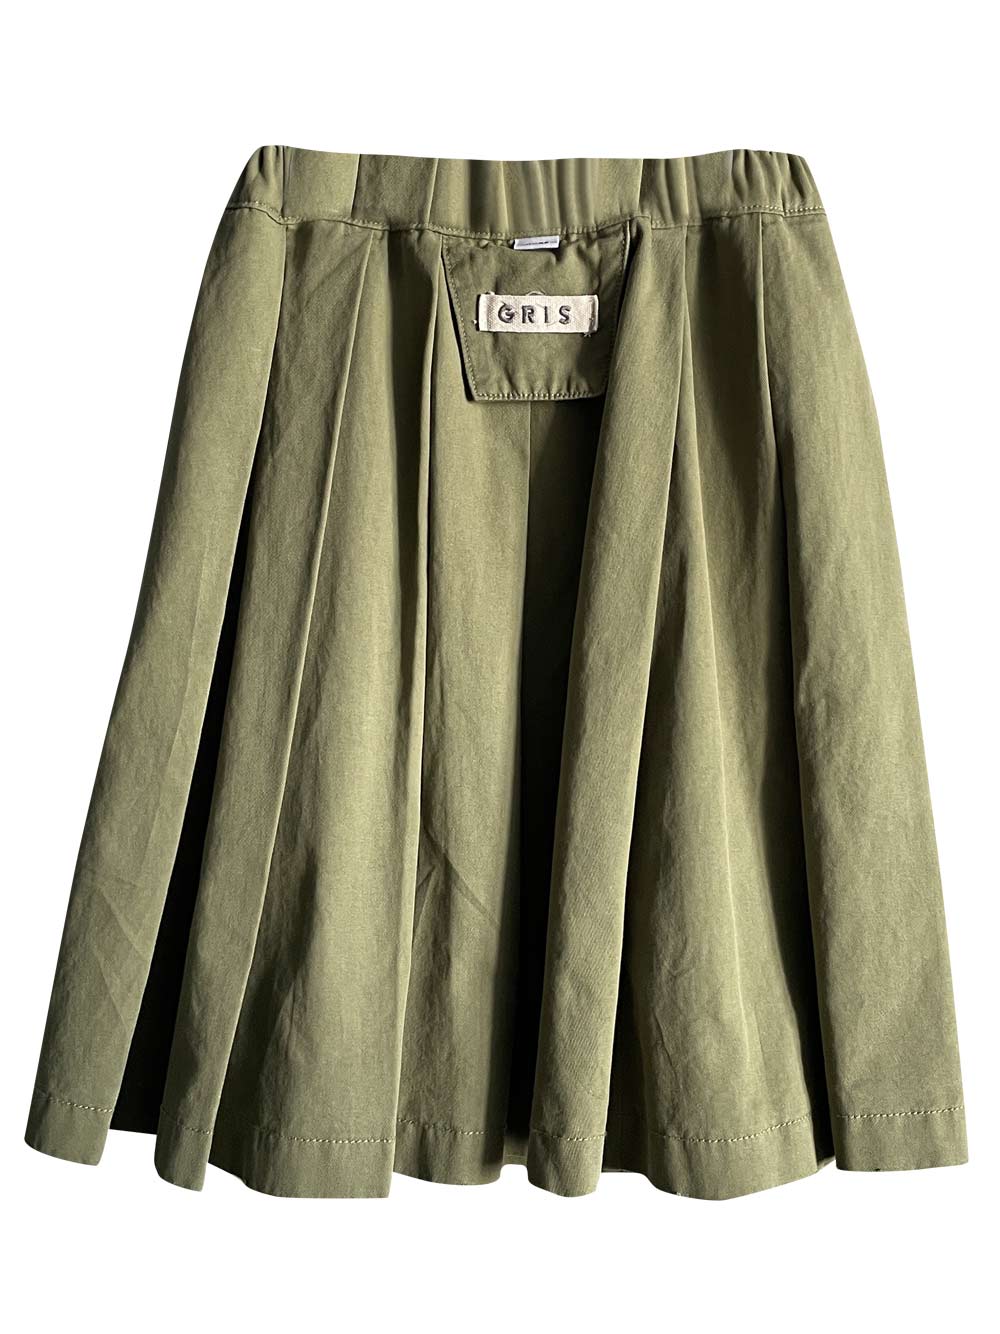 PREORDER: Olive Tack Flare Skirt